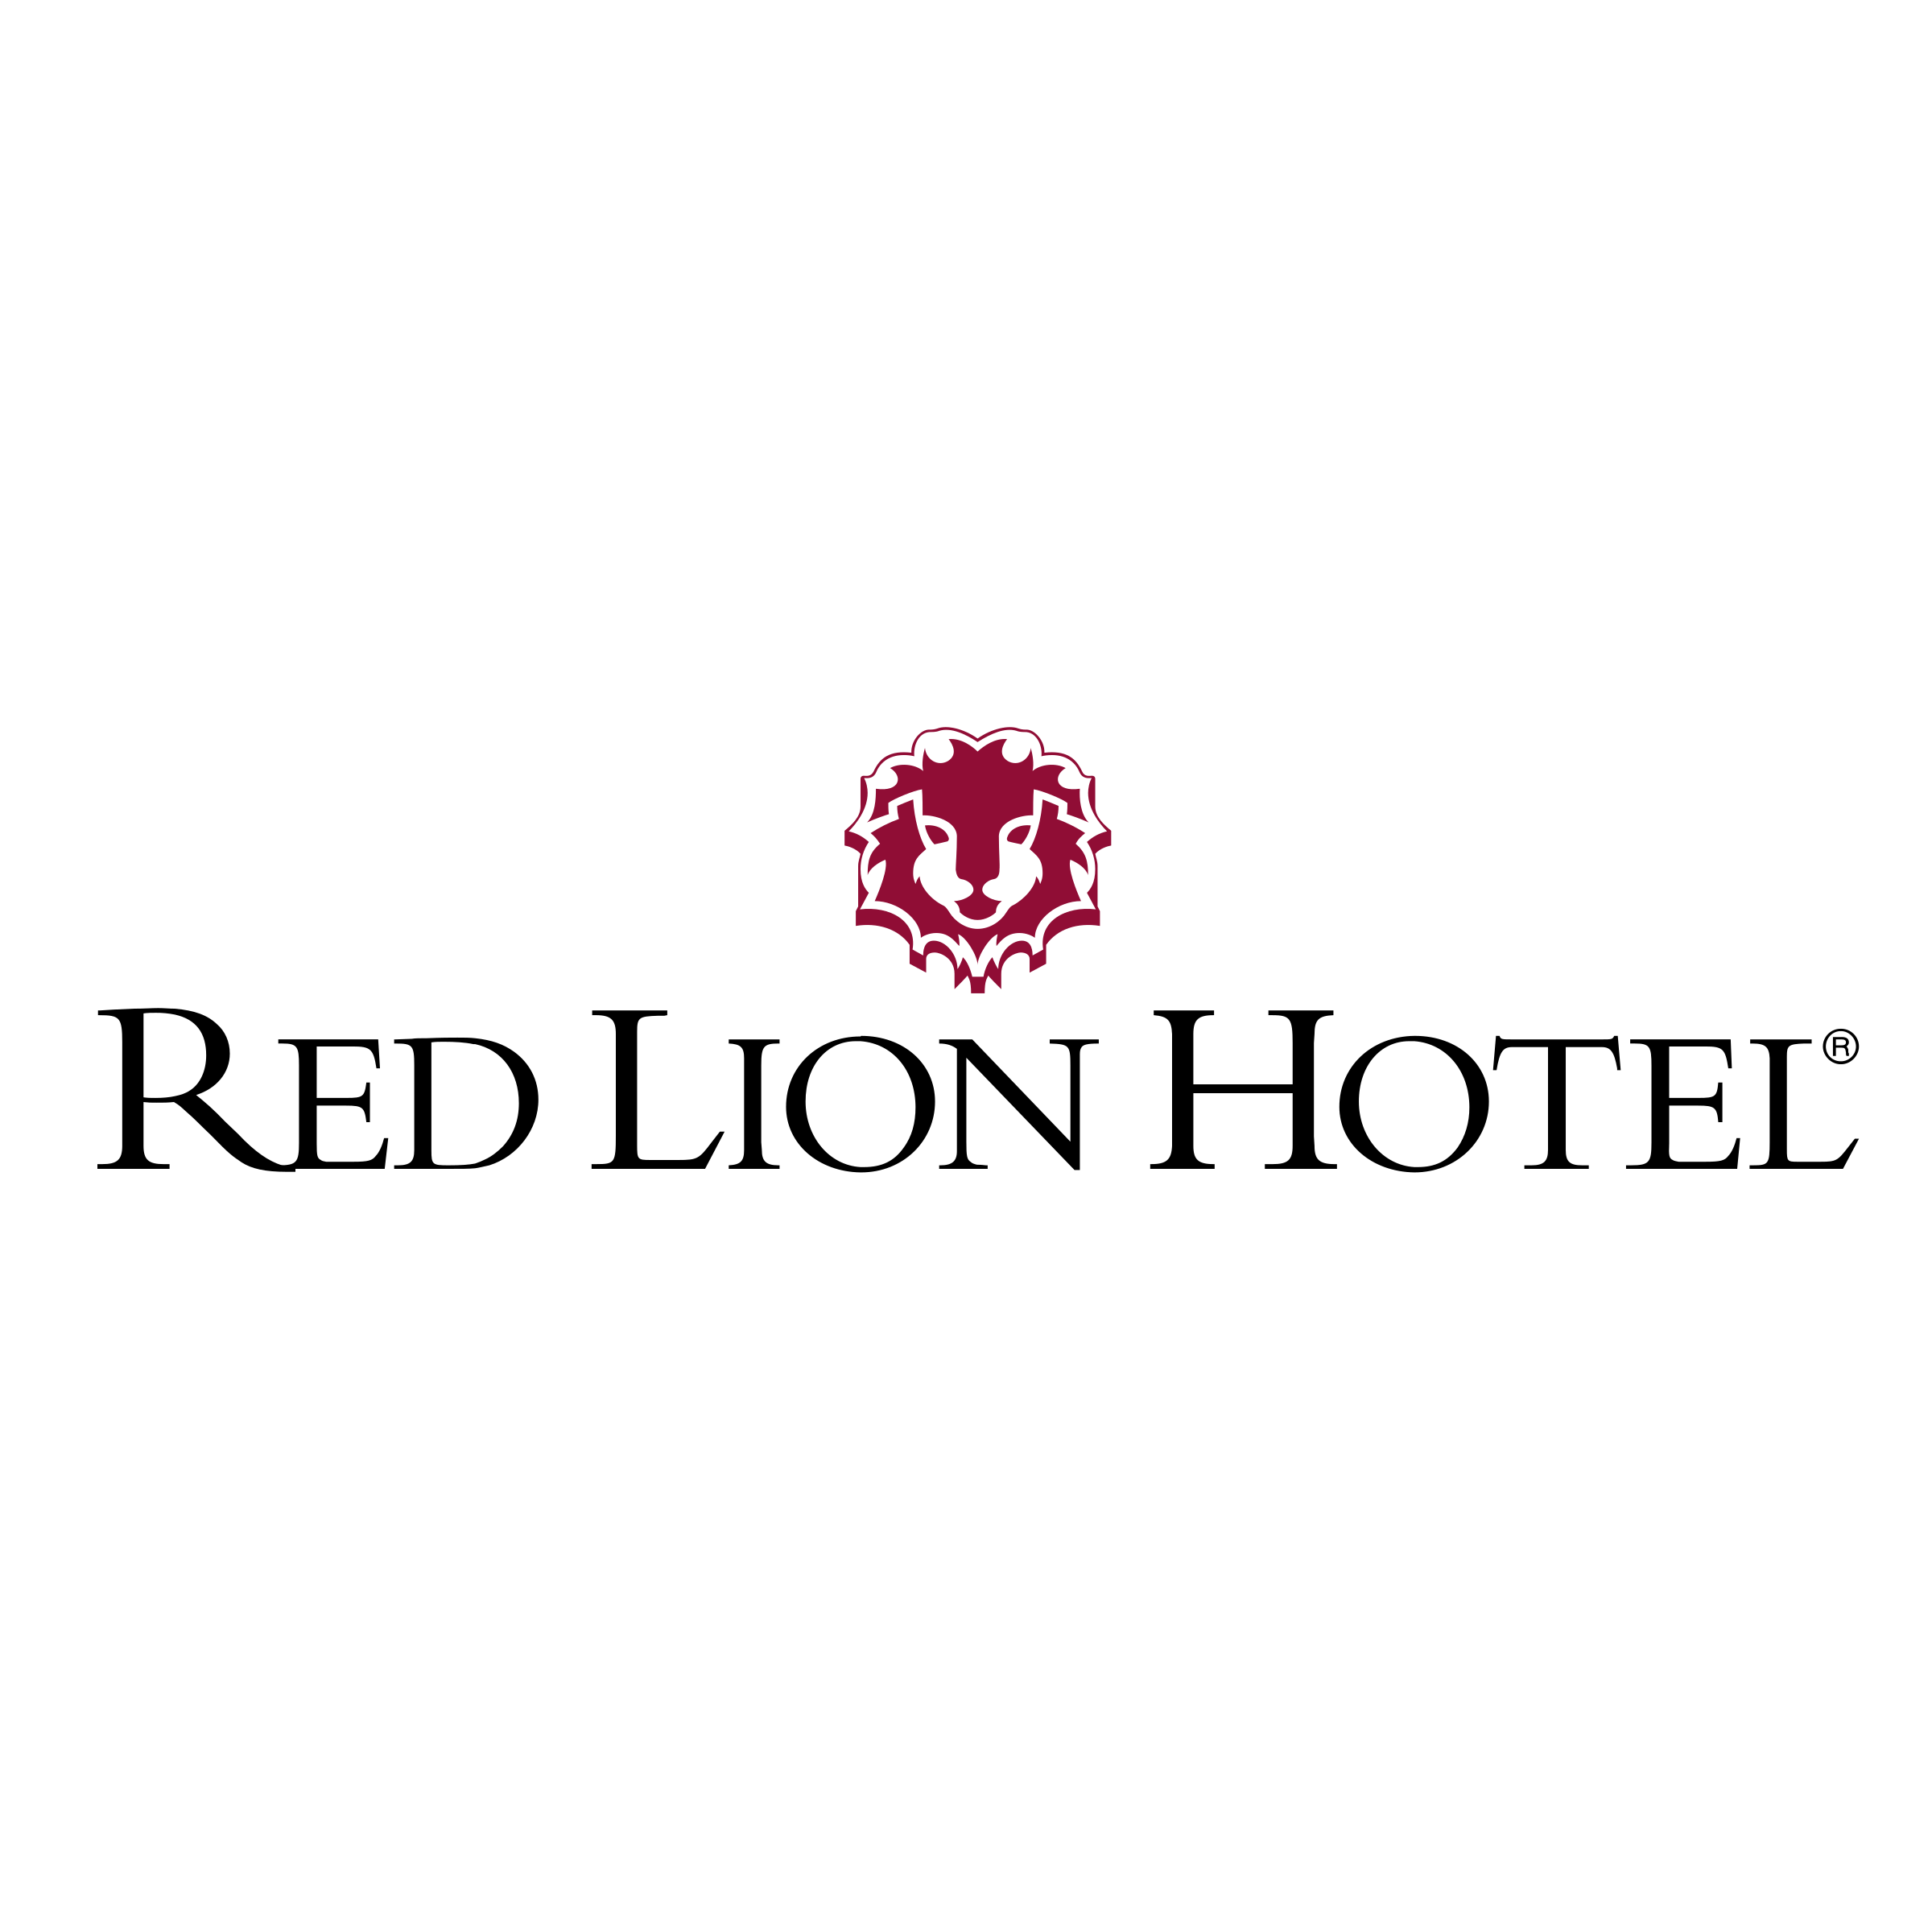 Red Lion Hotel Logo - Red Lion Hotel Logo PNG Transparent & SVG Vector - Freebie Supply